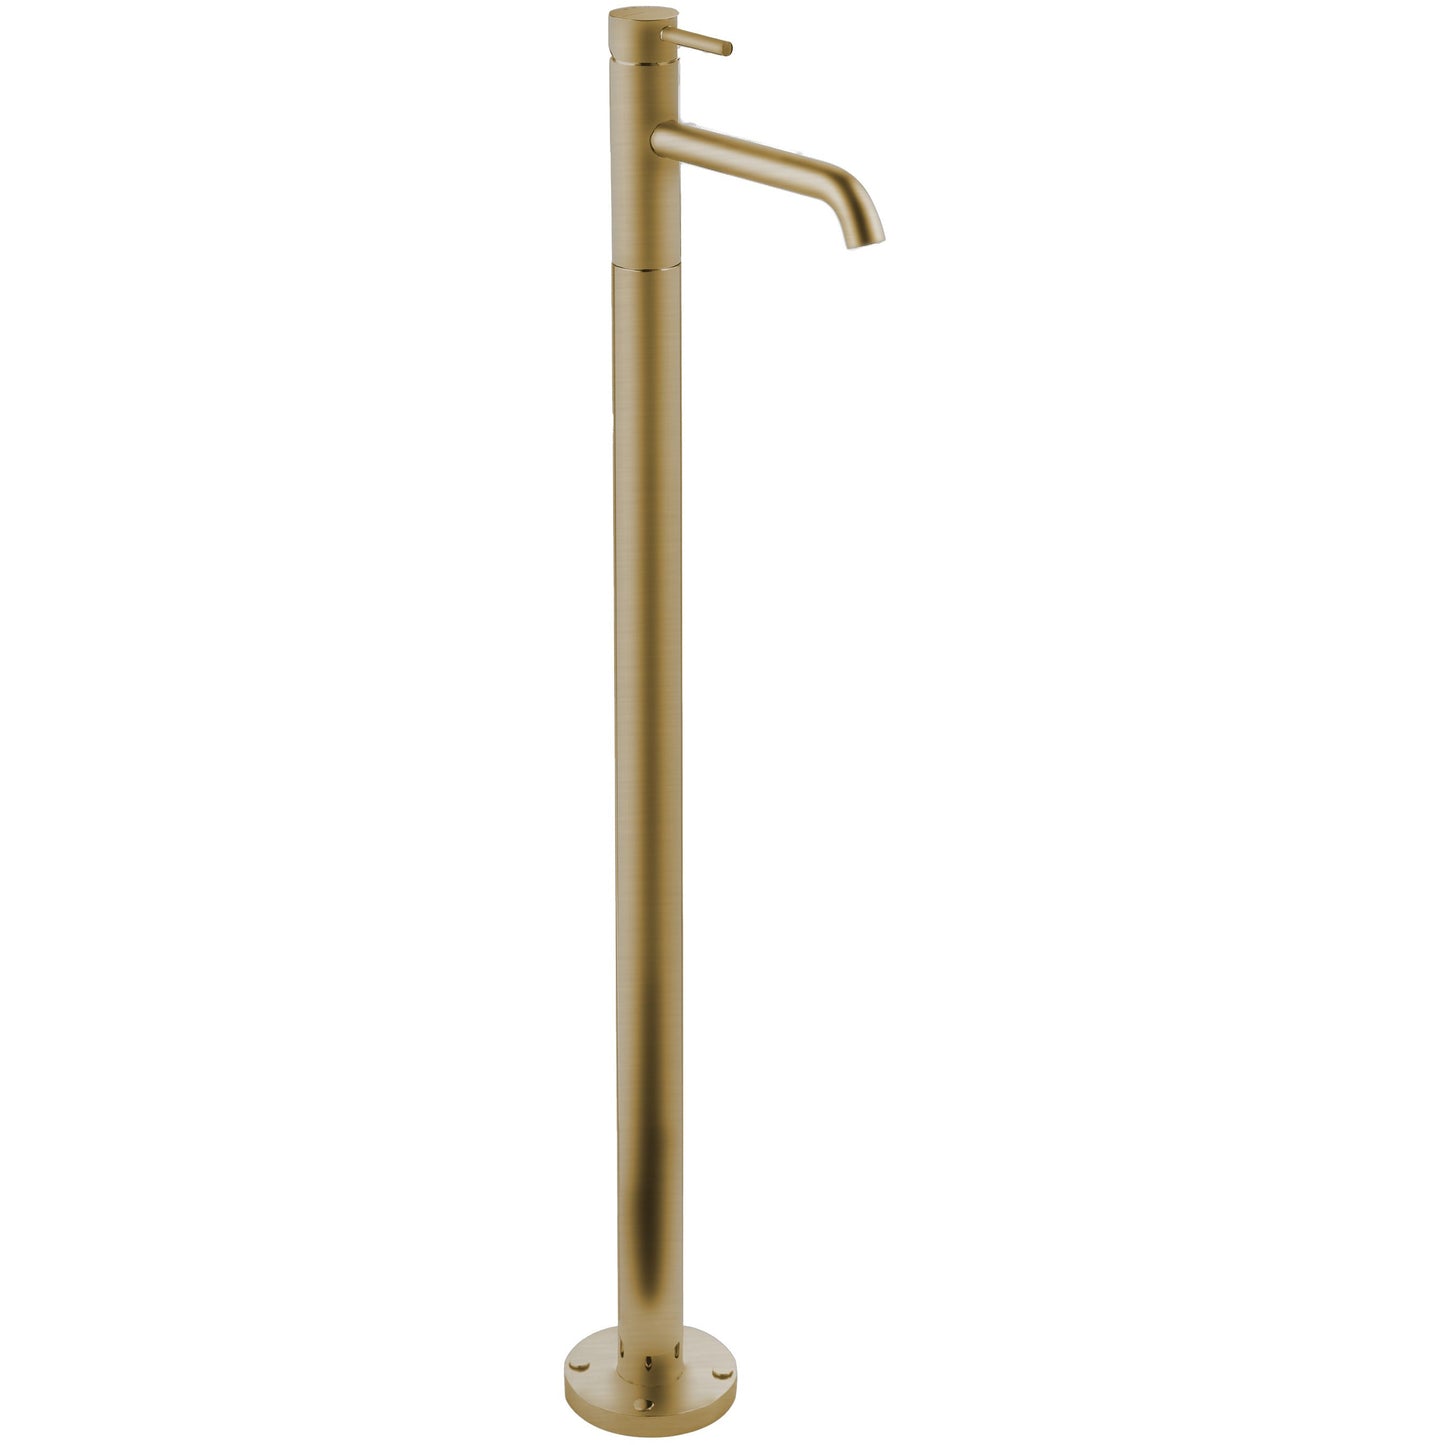 Lavabo faucet Digit freestanding single lever 123184 *SPECIAL ORDER*